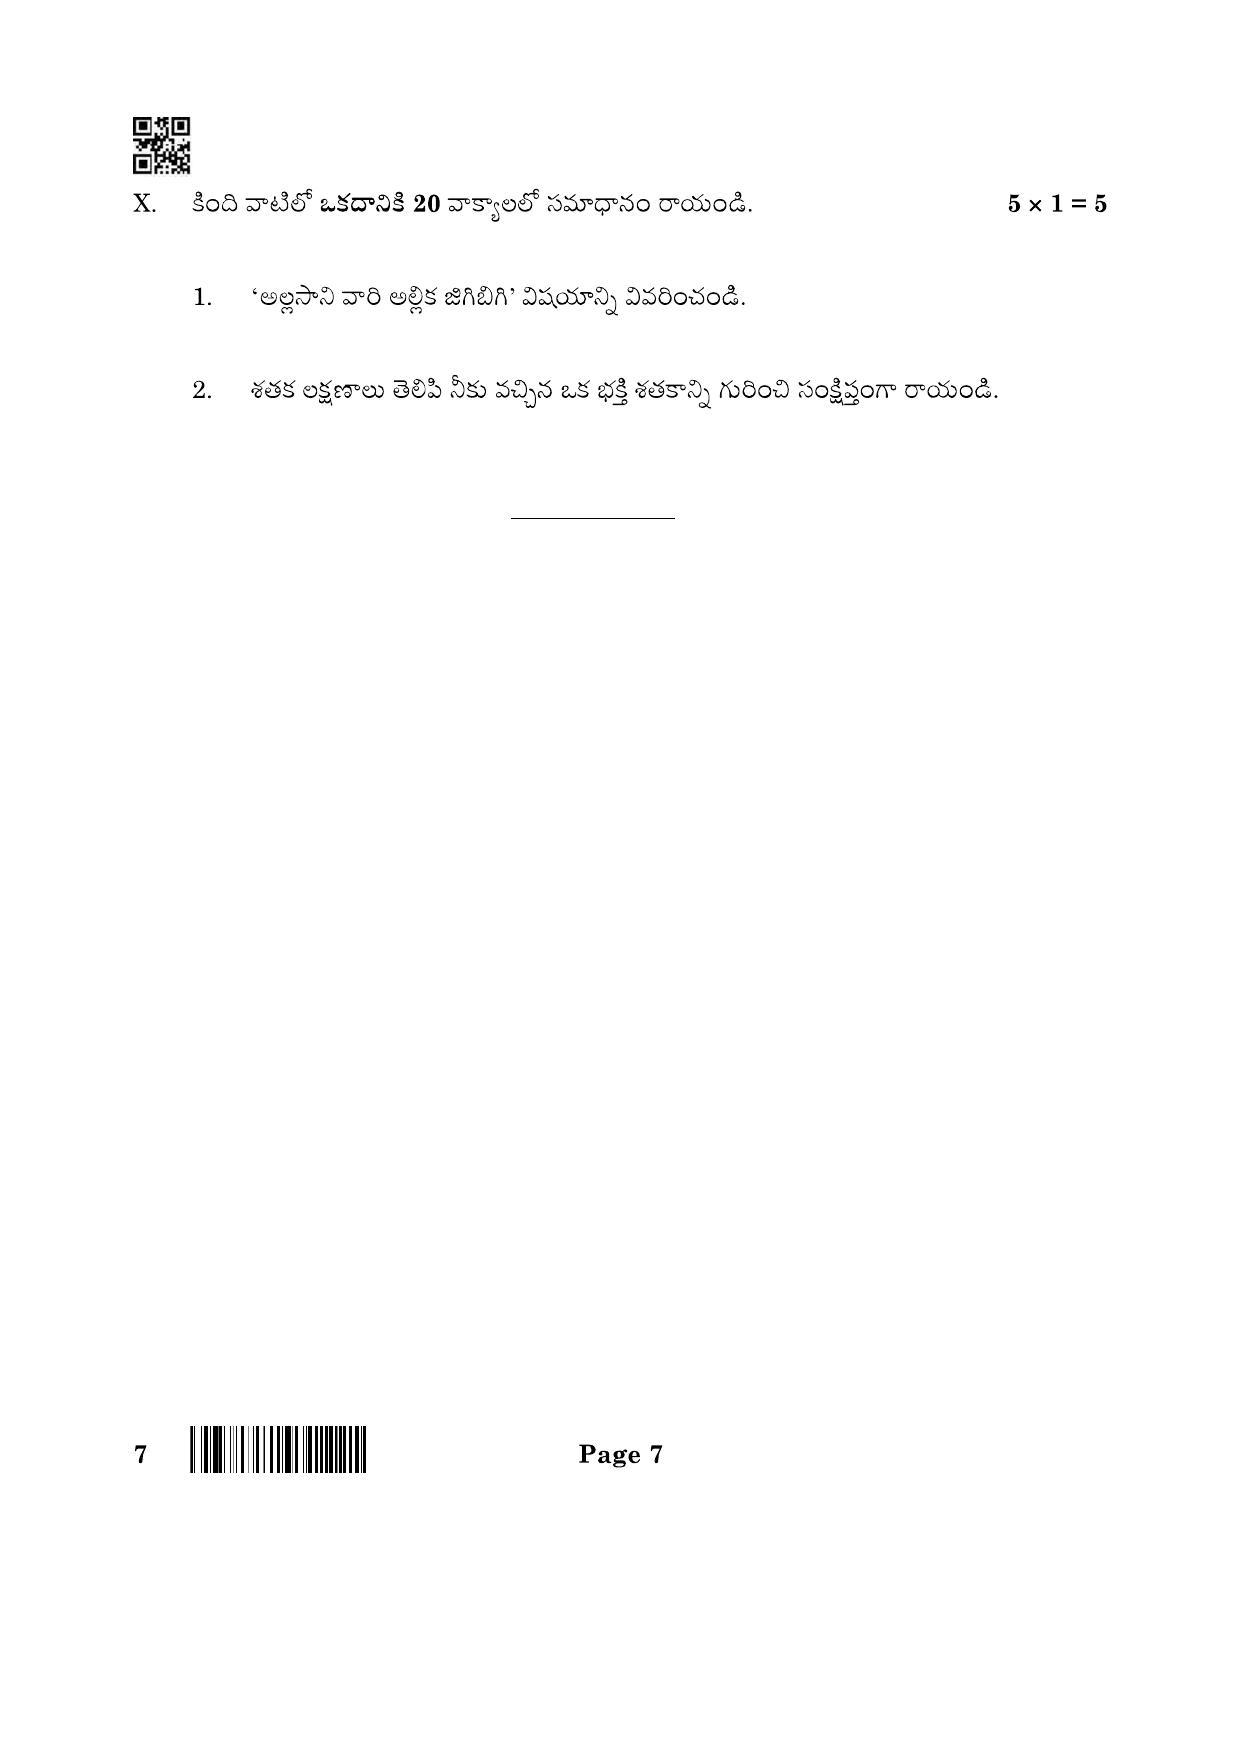 CBSE Class 12 7_Telugu 2022 Question Paper - Page 7